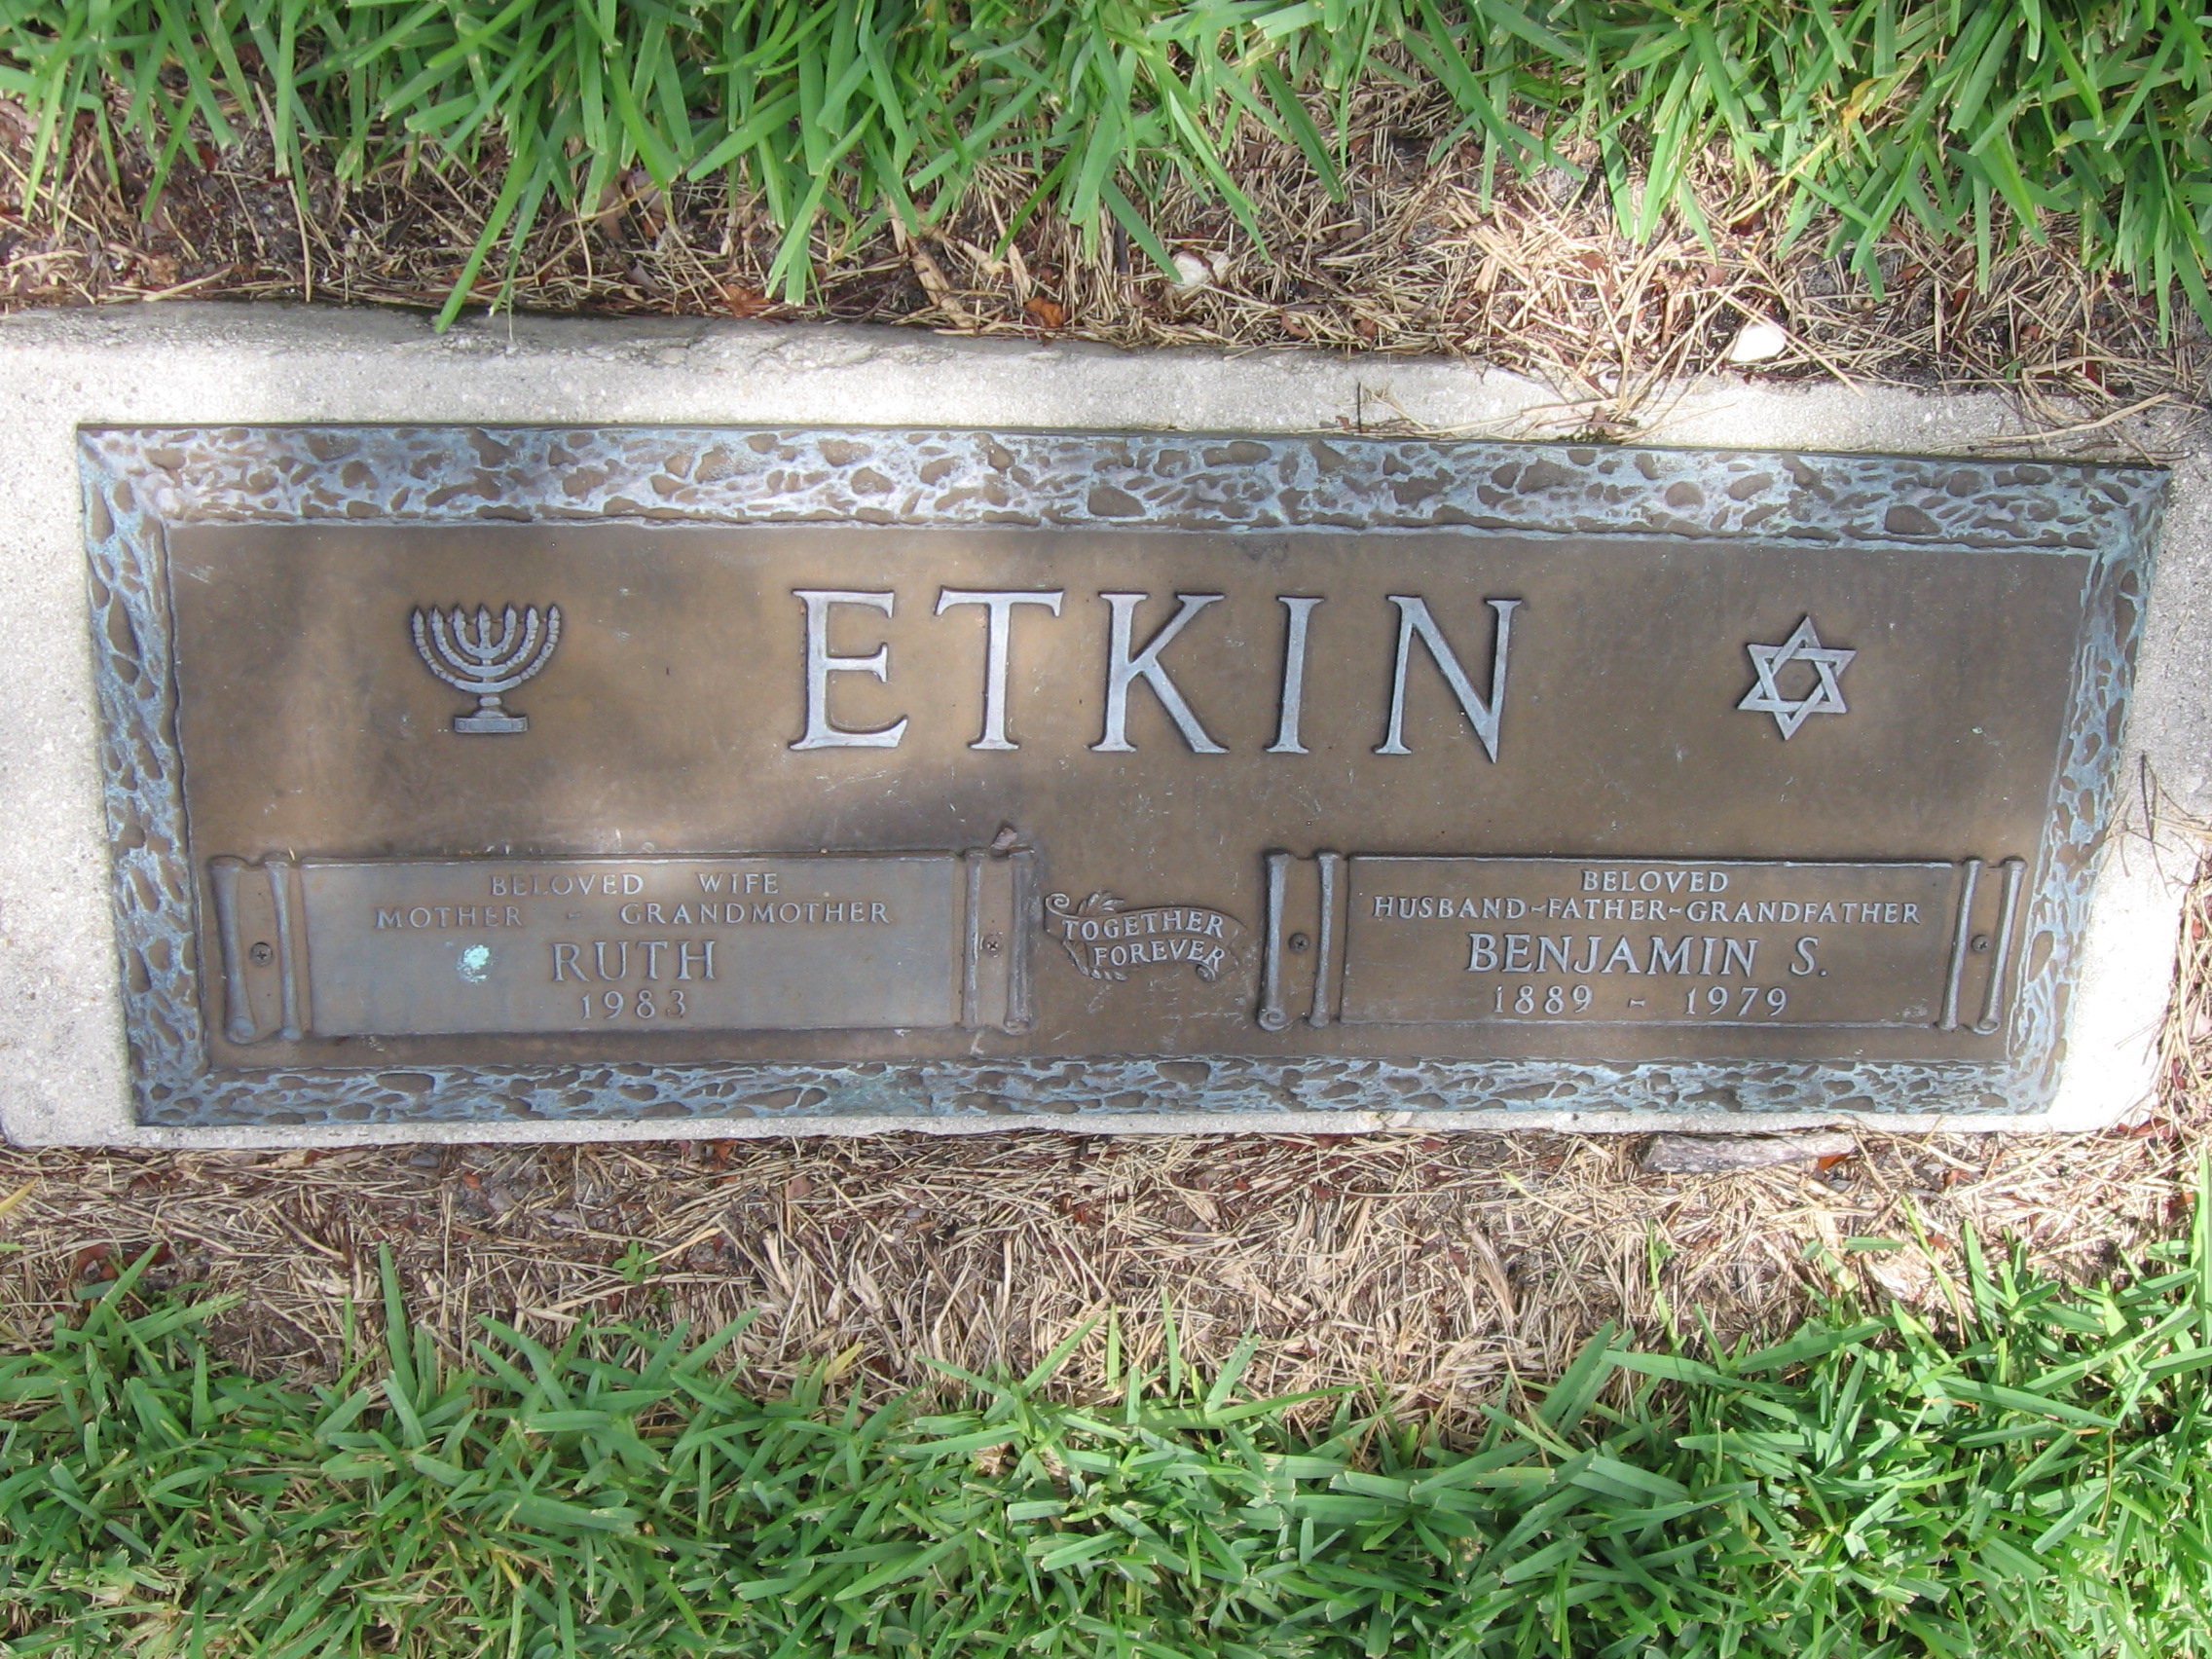 Benjamin S Etkin